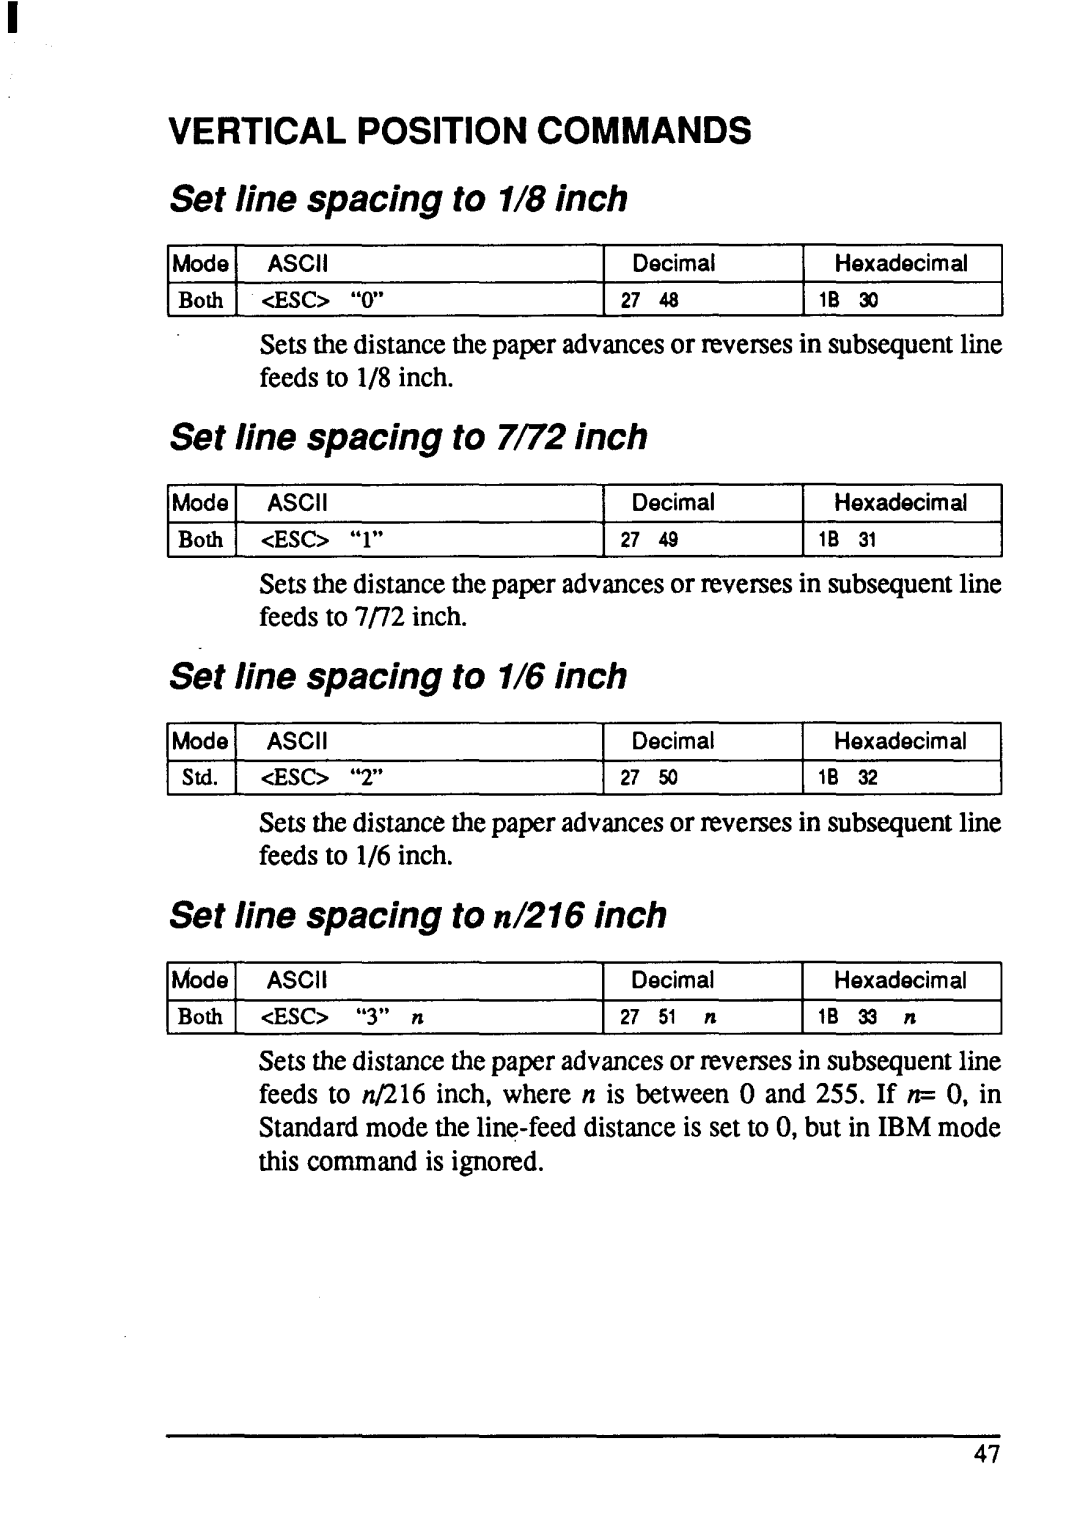 Star Micronics NX-1001 manual Vertical Position Commands, CEsc“o”, n/216 